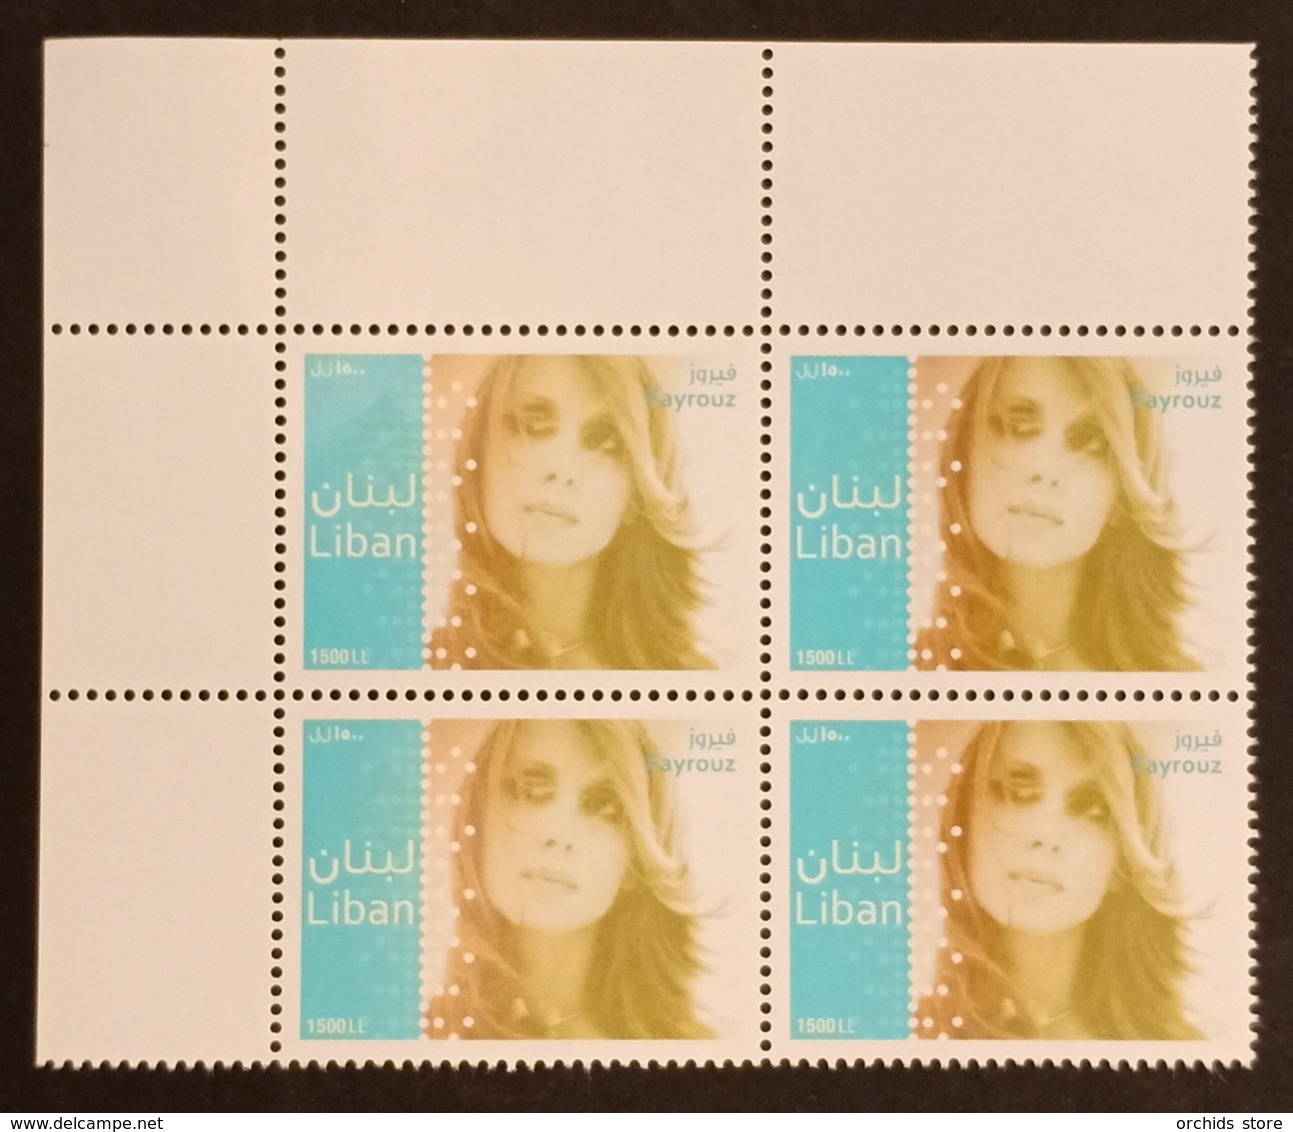 Lebanon 2011 MNH Stamp Corner Blk/4 - Fayrouz Famous Arabic Singer - Lebanon